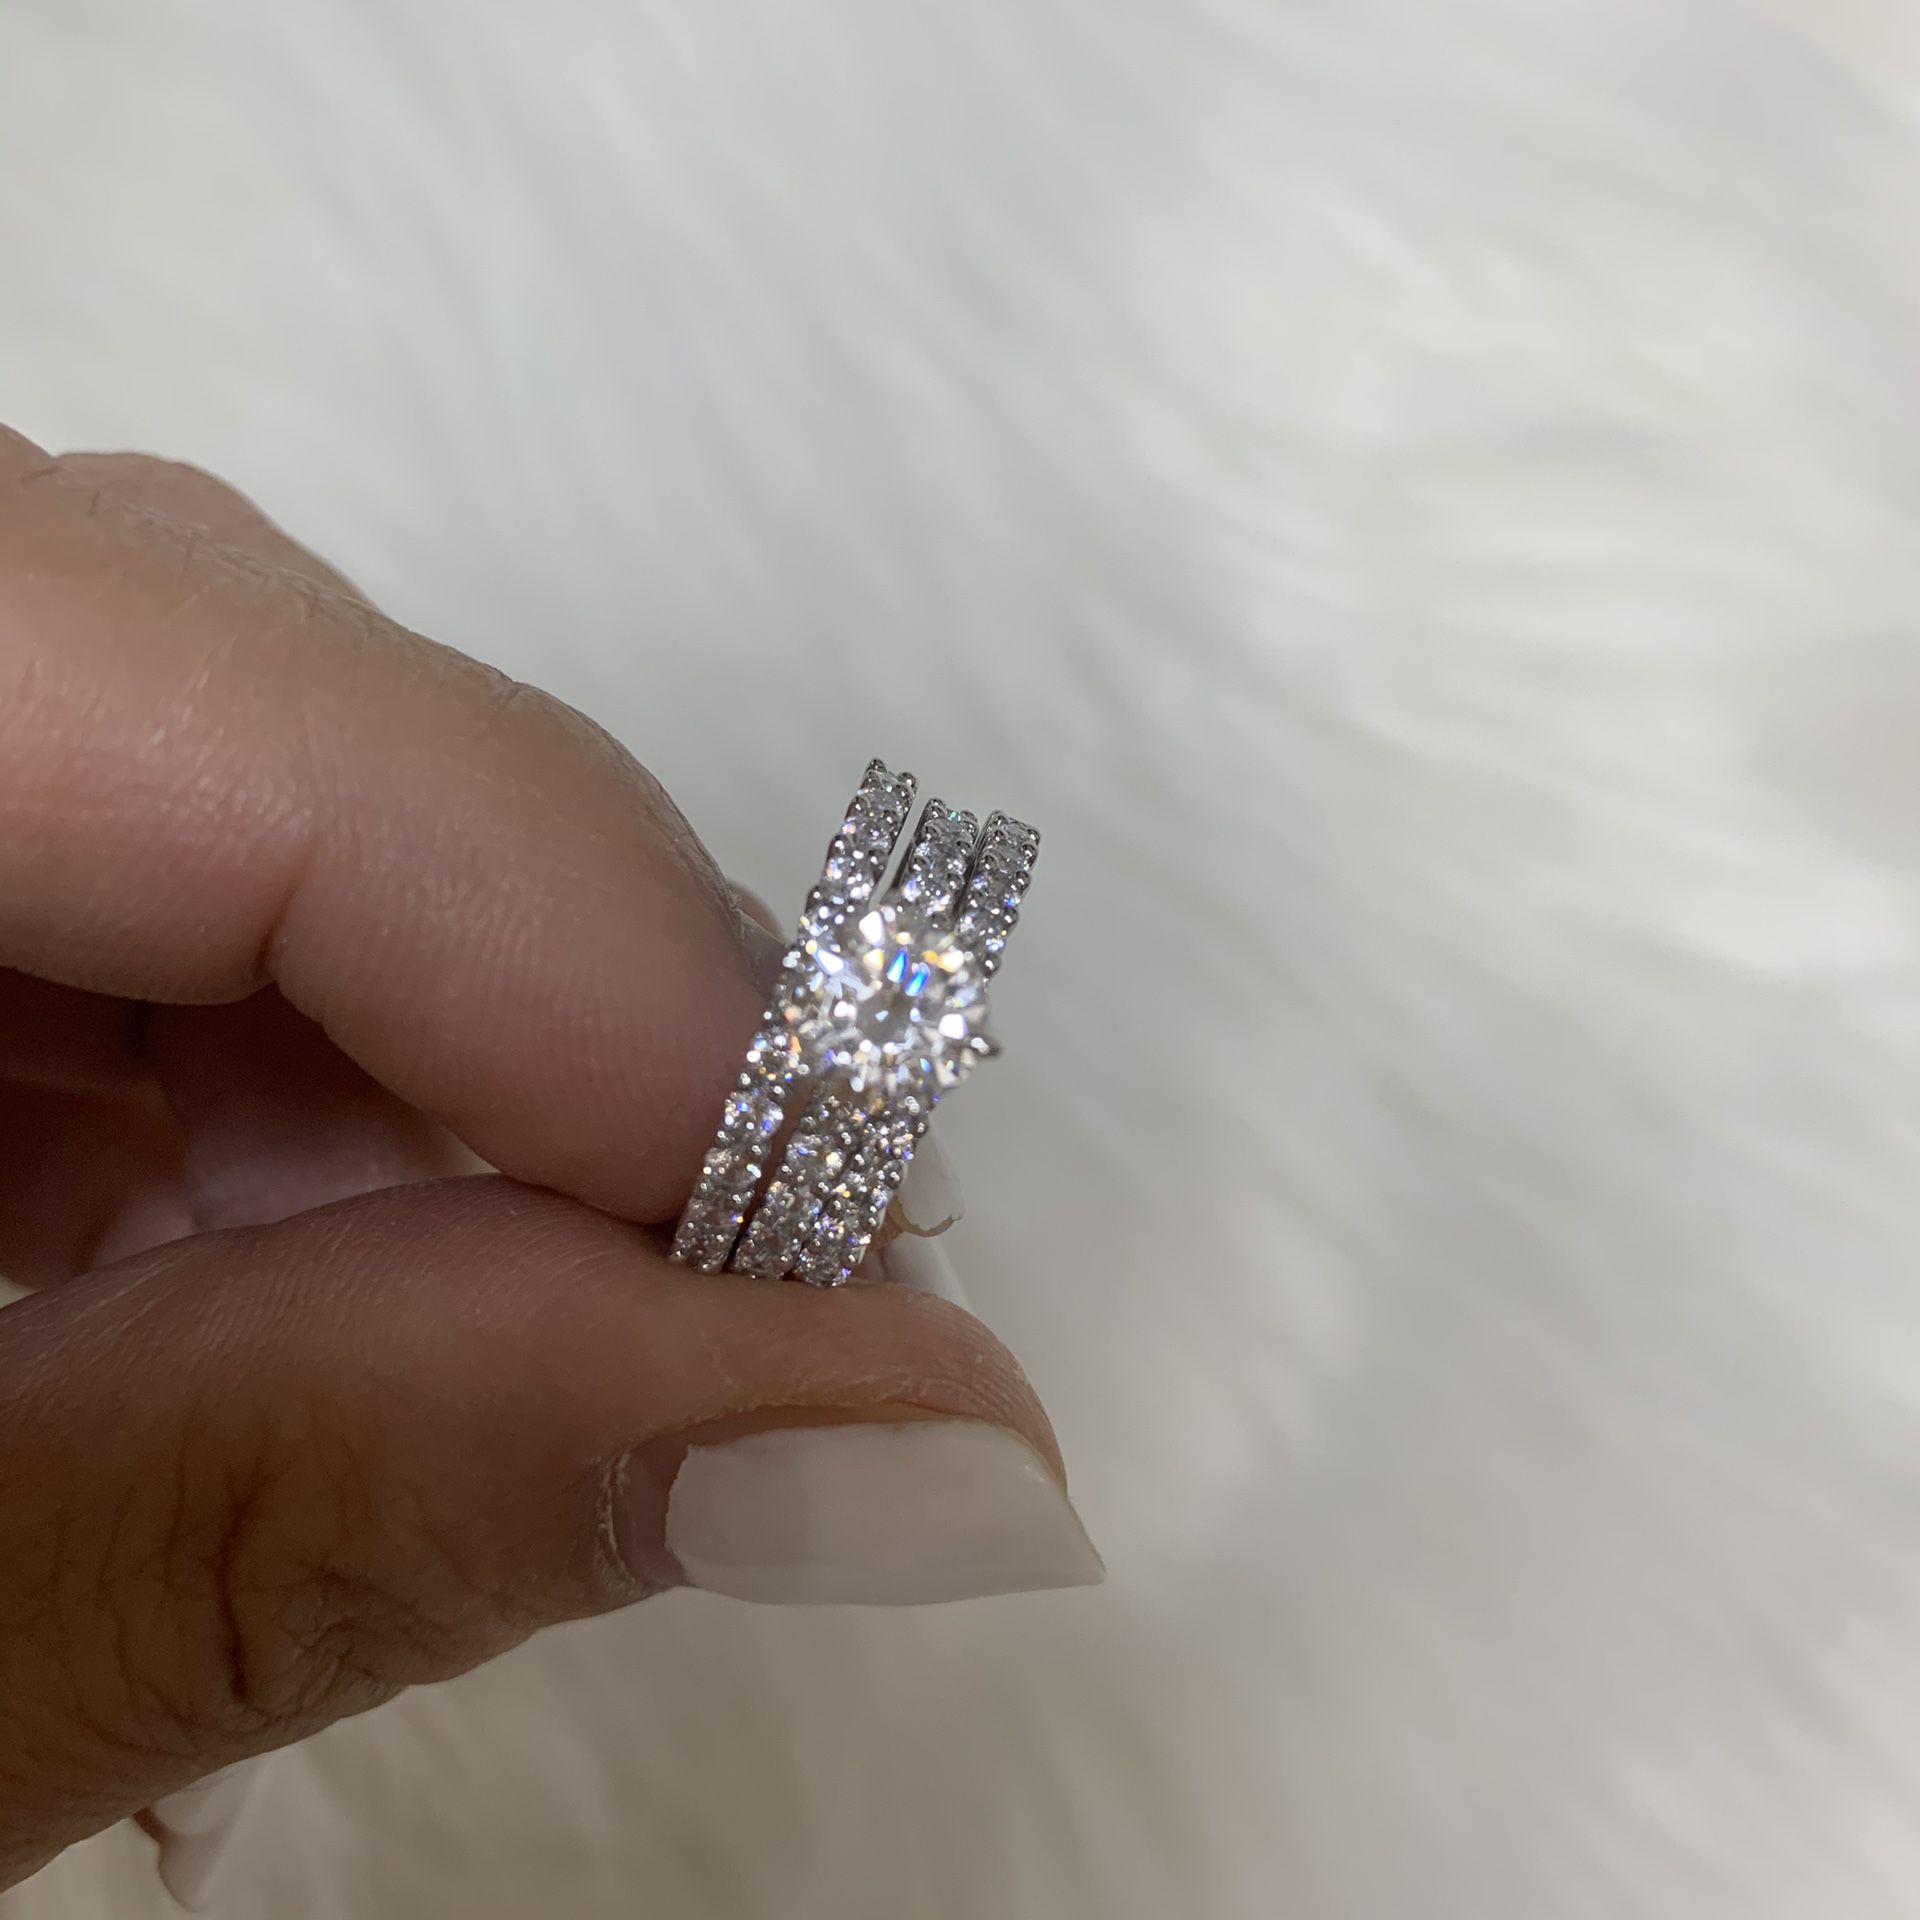 Engagement and wedding ring set size 6